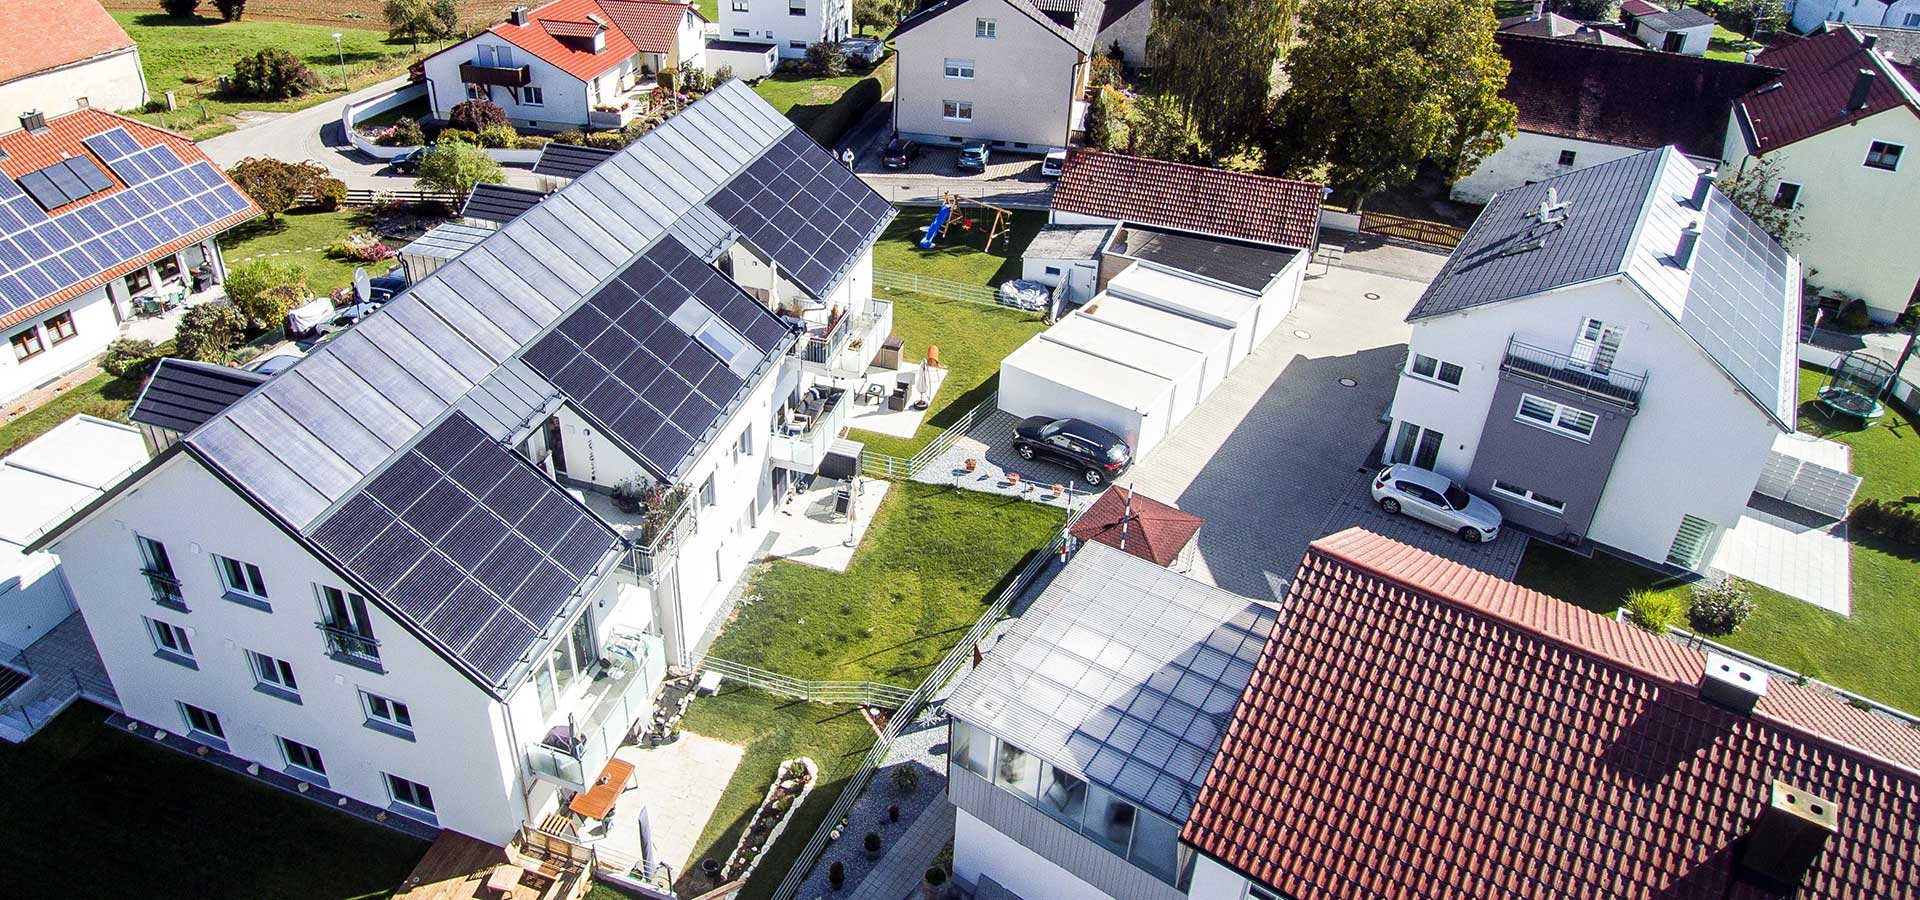 mehrfamilienhaus-solar-kollektoren-und-panele